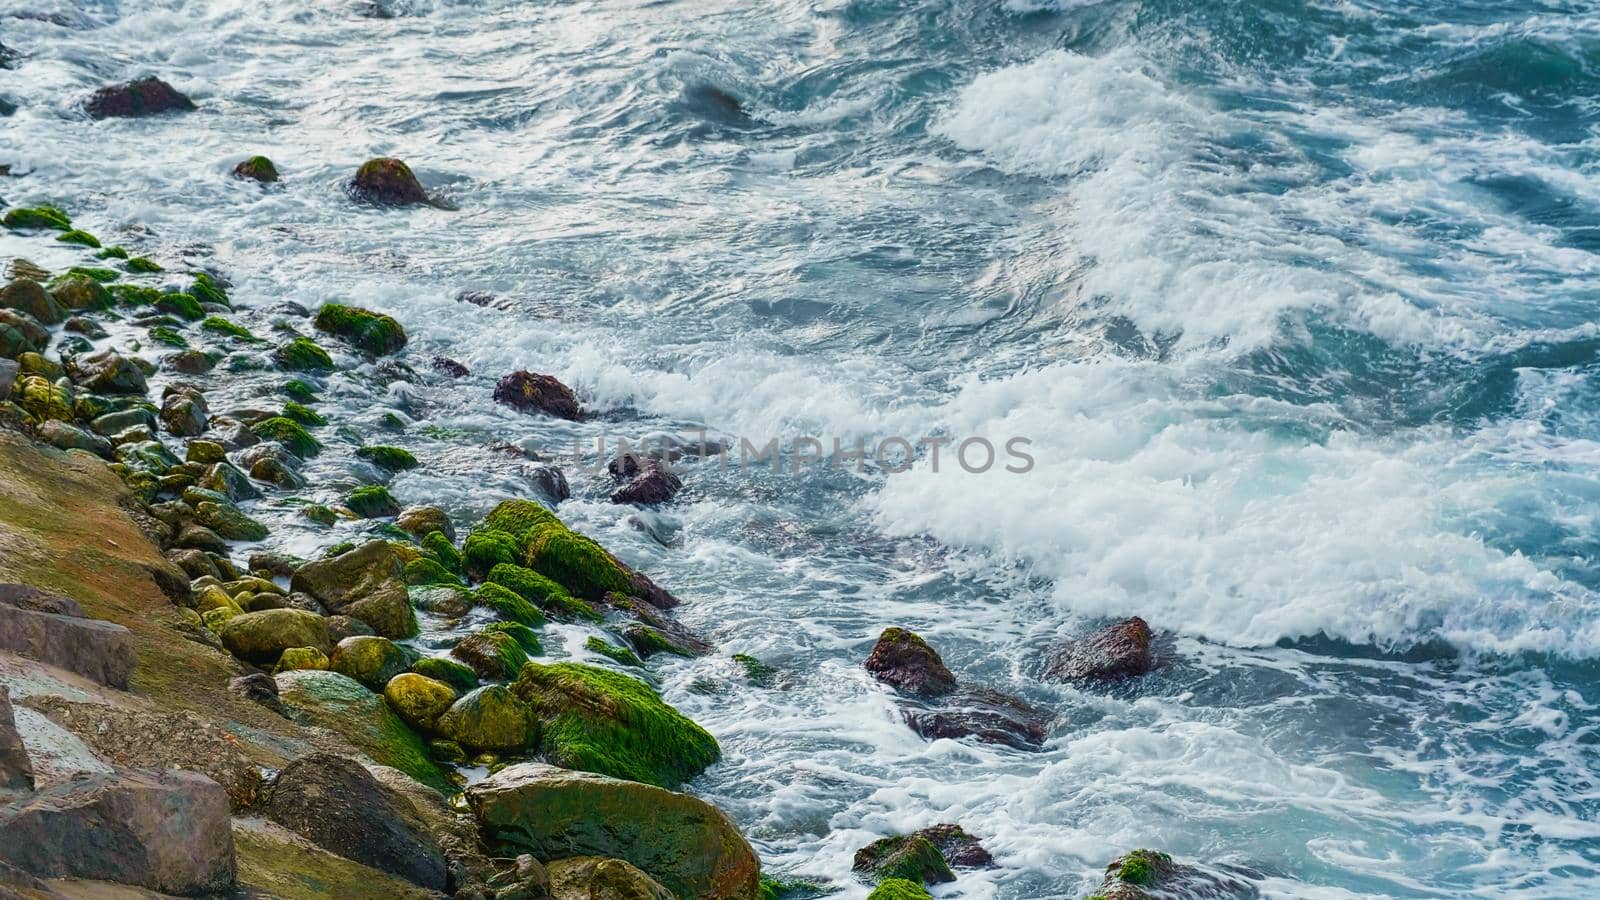 Power of foamy waves breaking over stones. Stormy Black Sea in cold seasons.